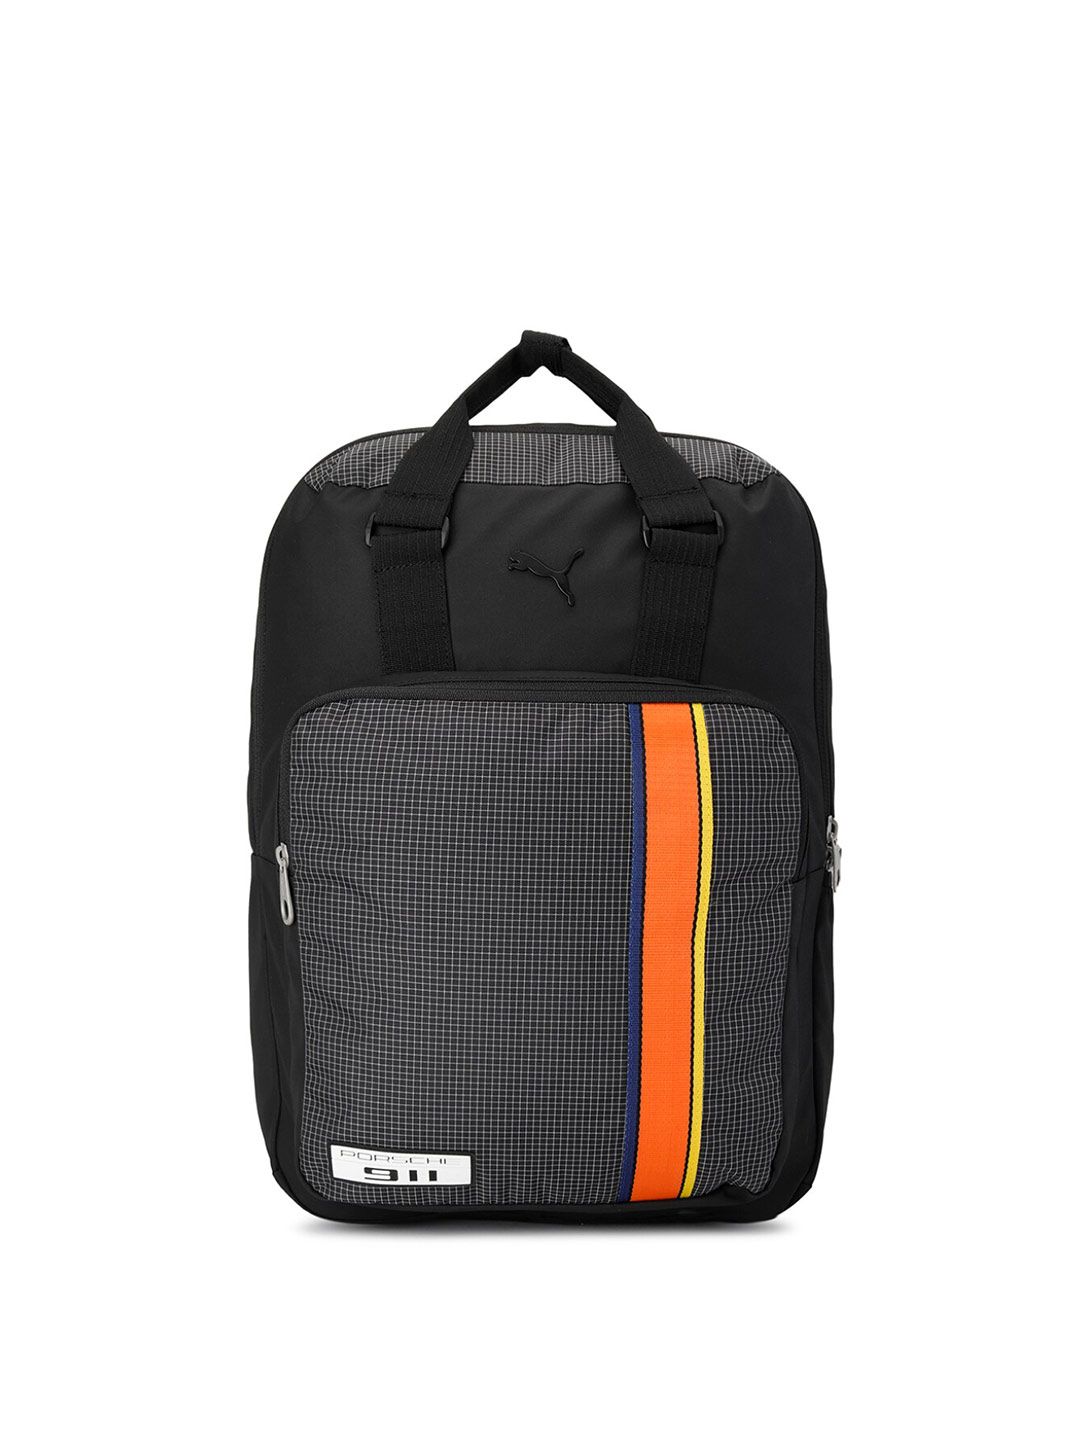 Puma Unisex Black & Grey Colourblocked Backpack Price in India